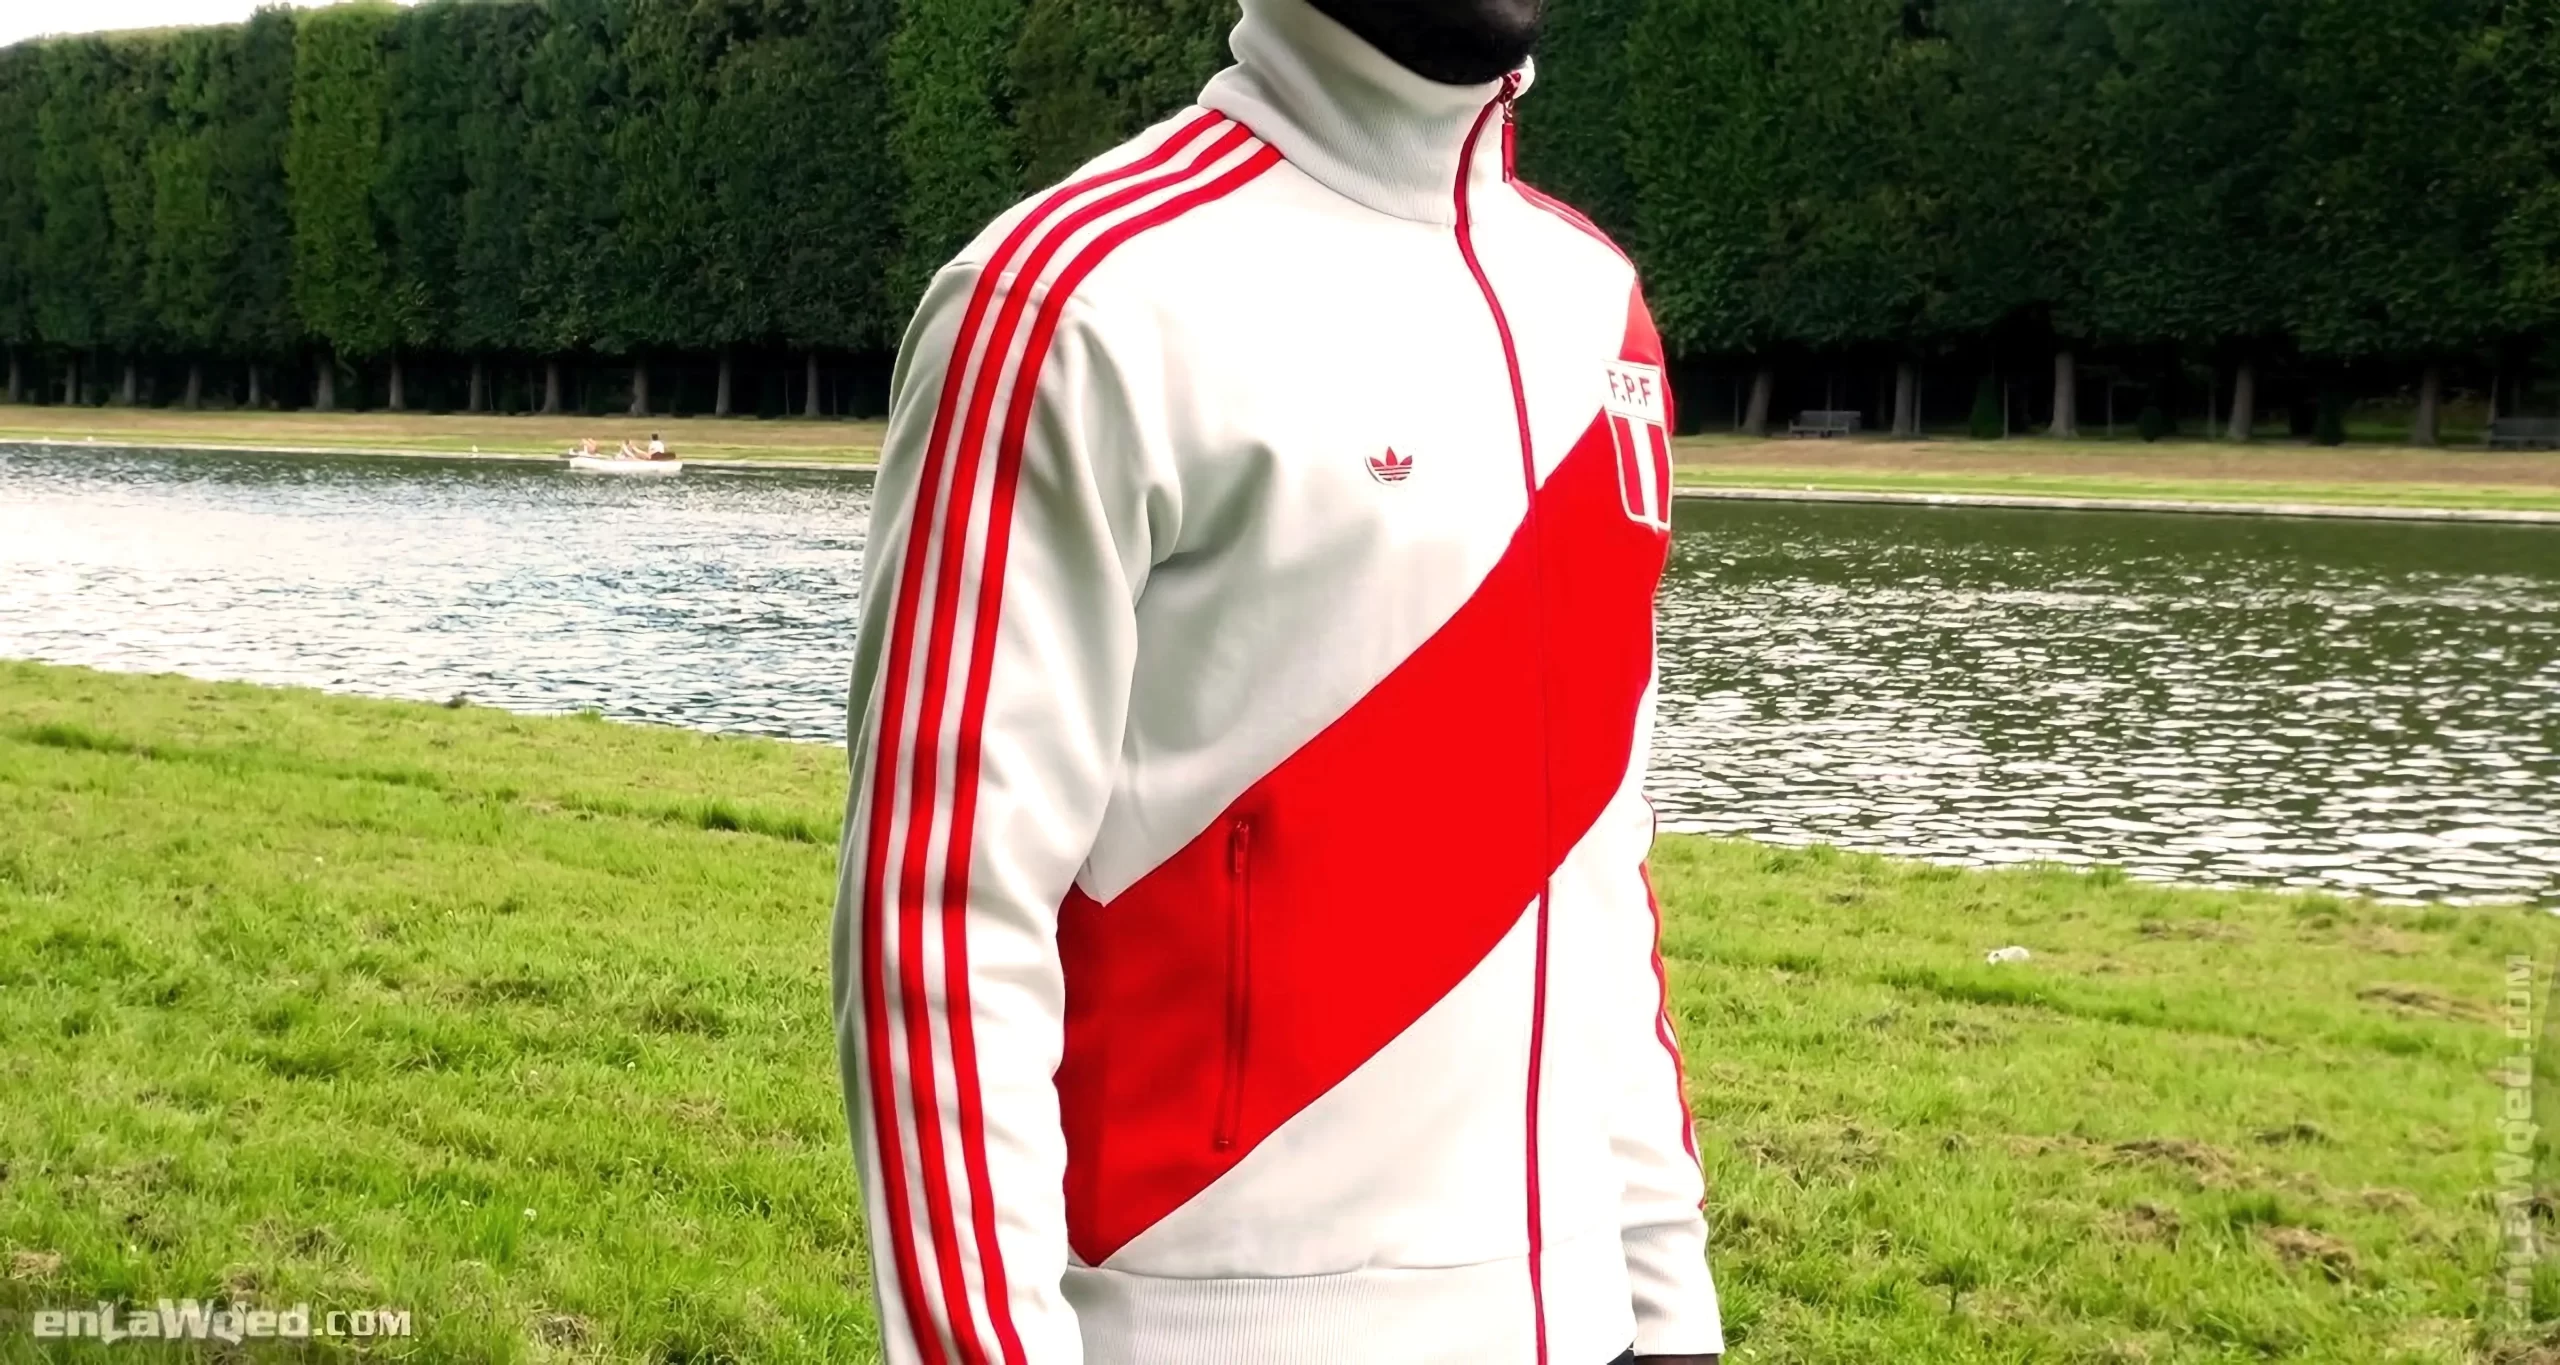 Men’s 2005 Peru ’78 Cubillas TT by Adidas Originals: Definitely (EnLawded.com file #lmc4nkcv1xzbqsuq56p)